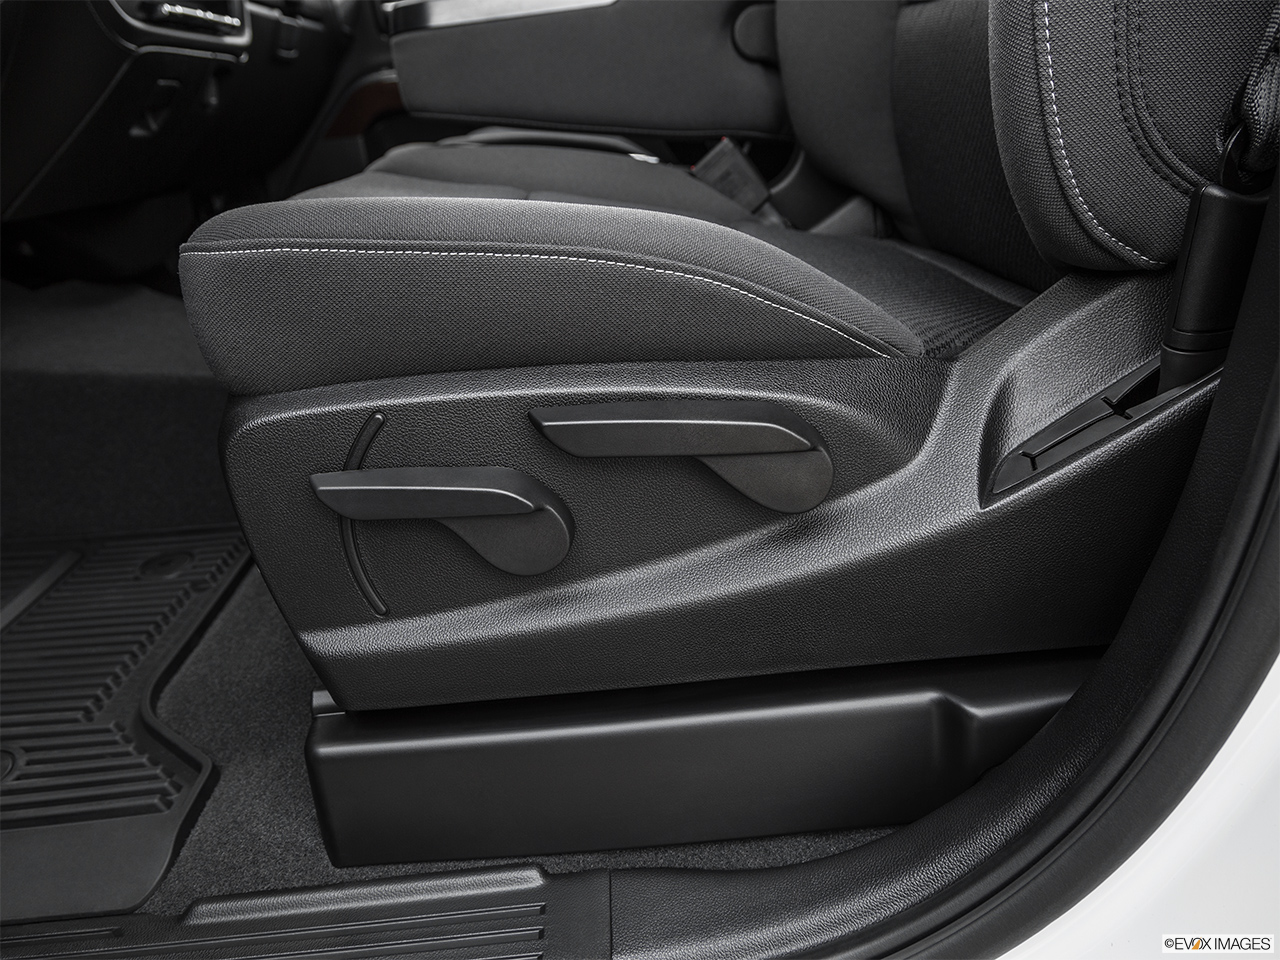 2019 GMC Sierra 2500HD SLE Seat Adjustment Controllers. 